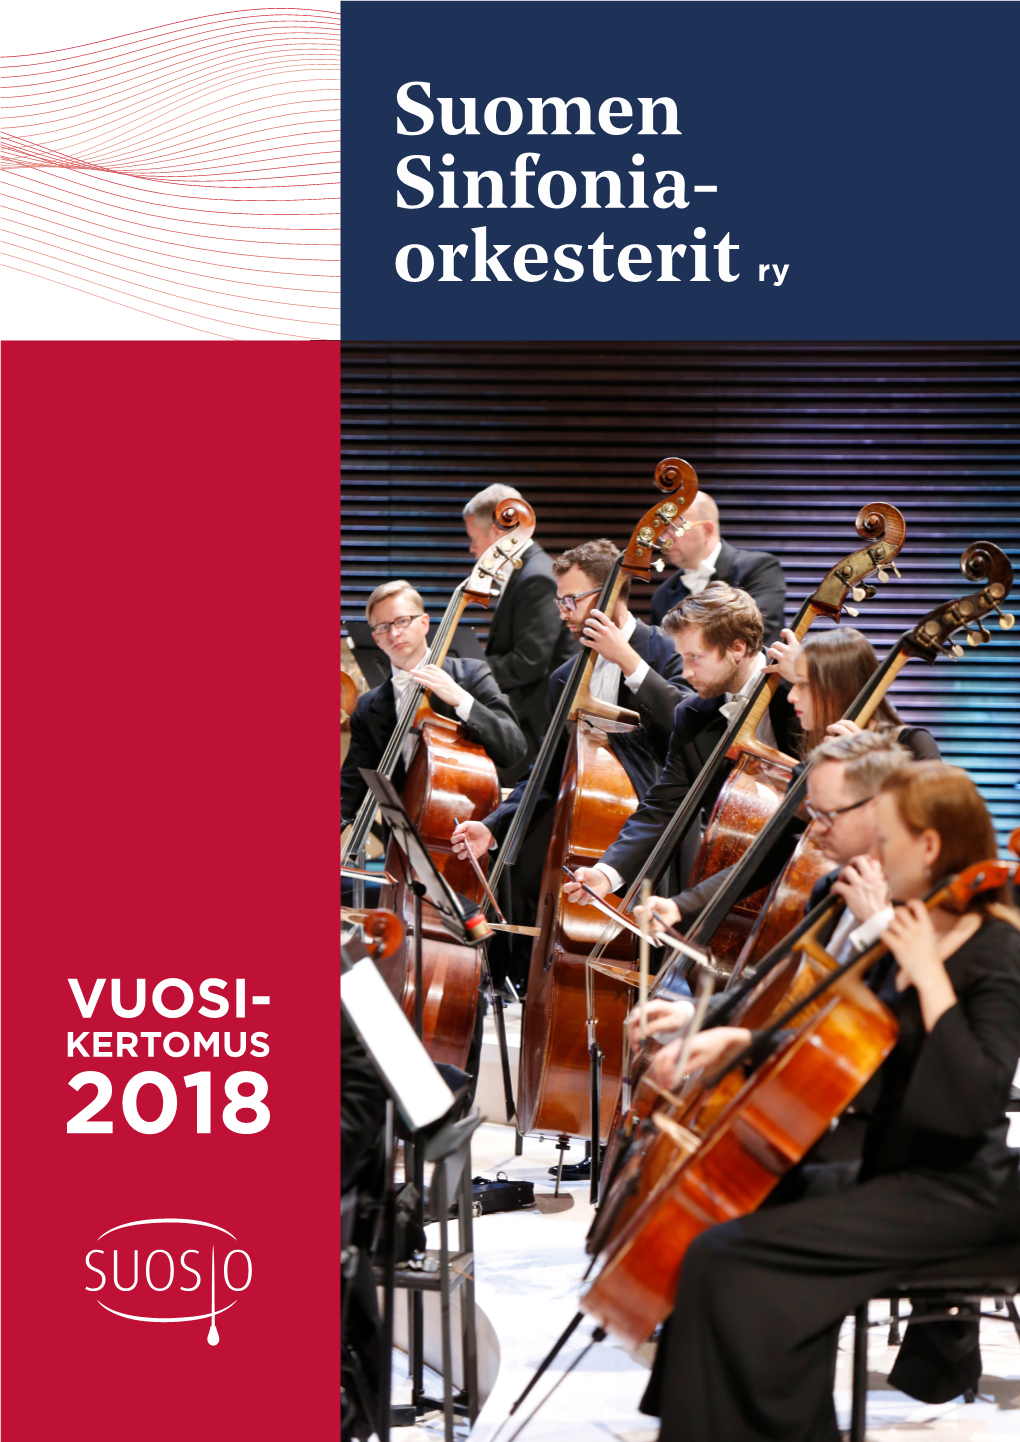 Suomen Sinfonia- Orkesterit Ry